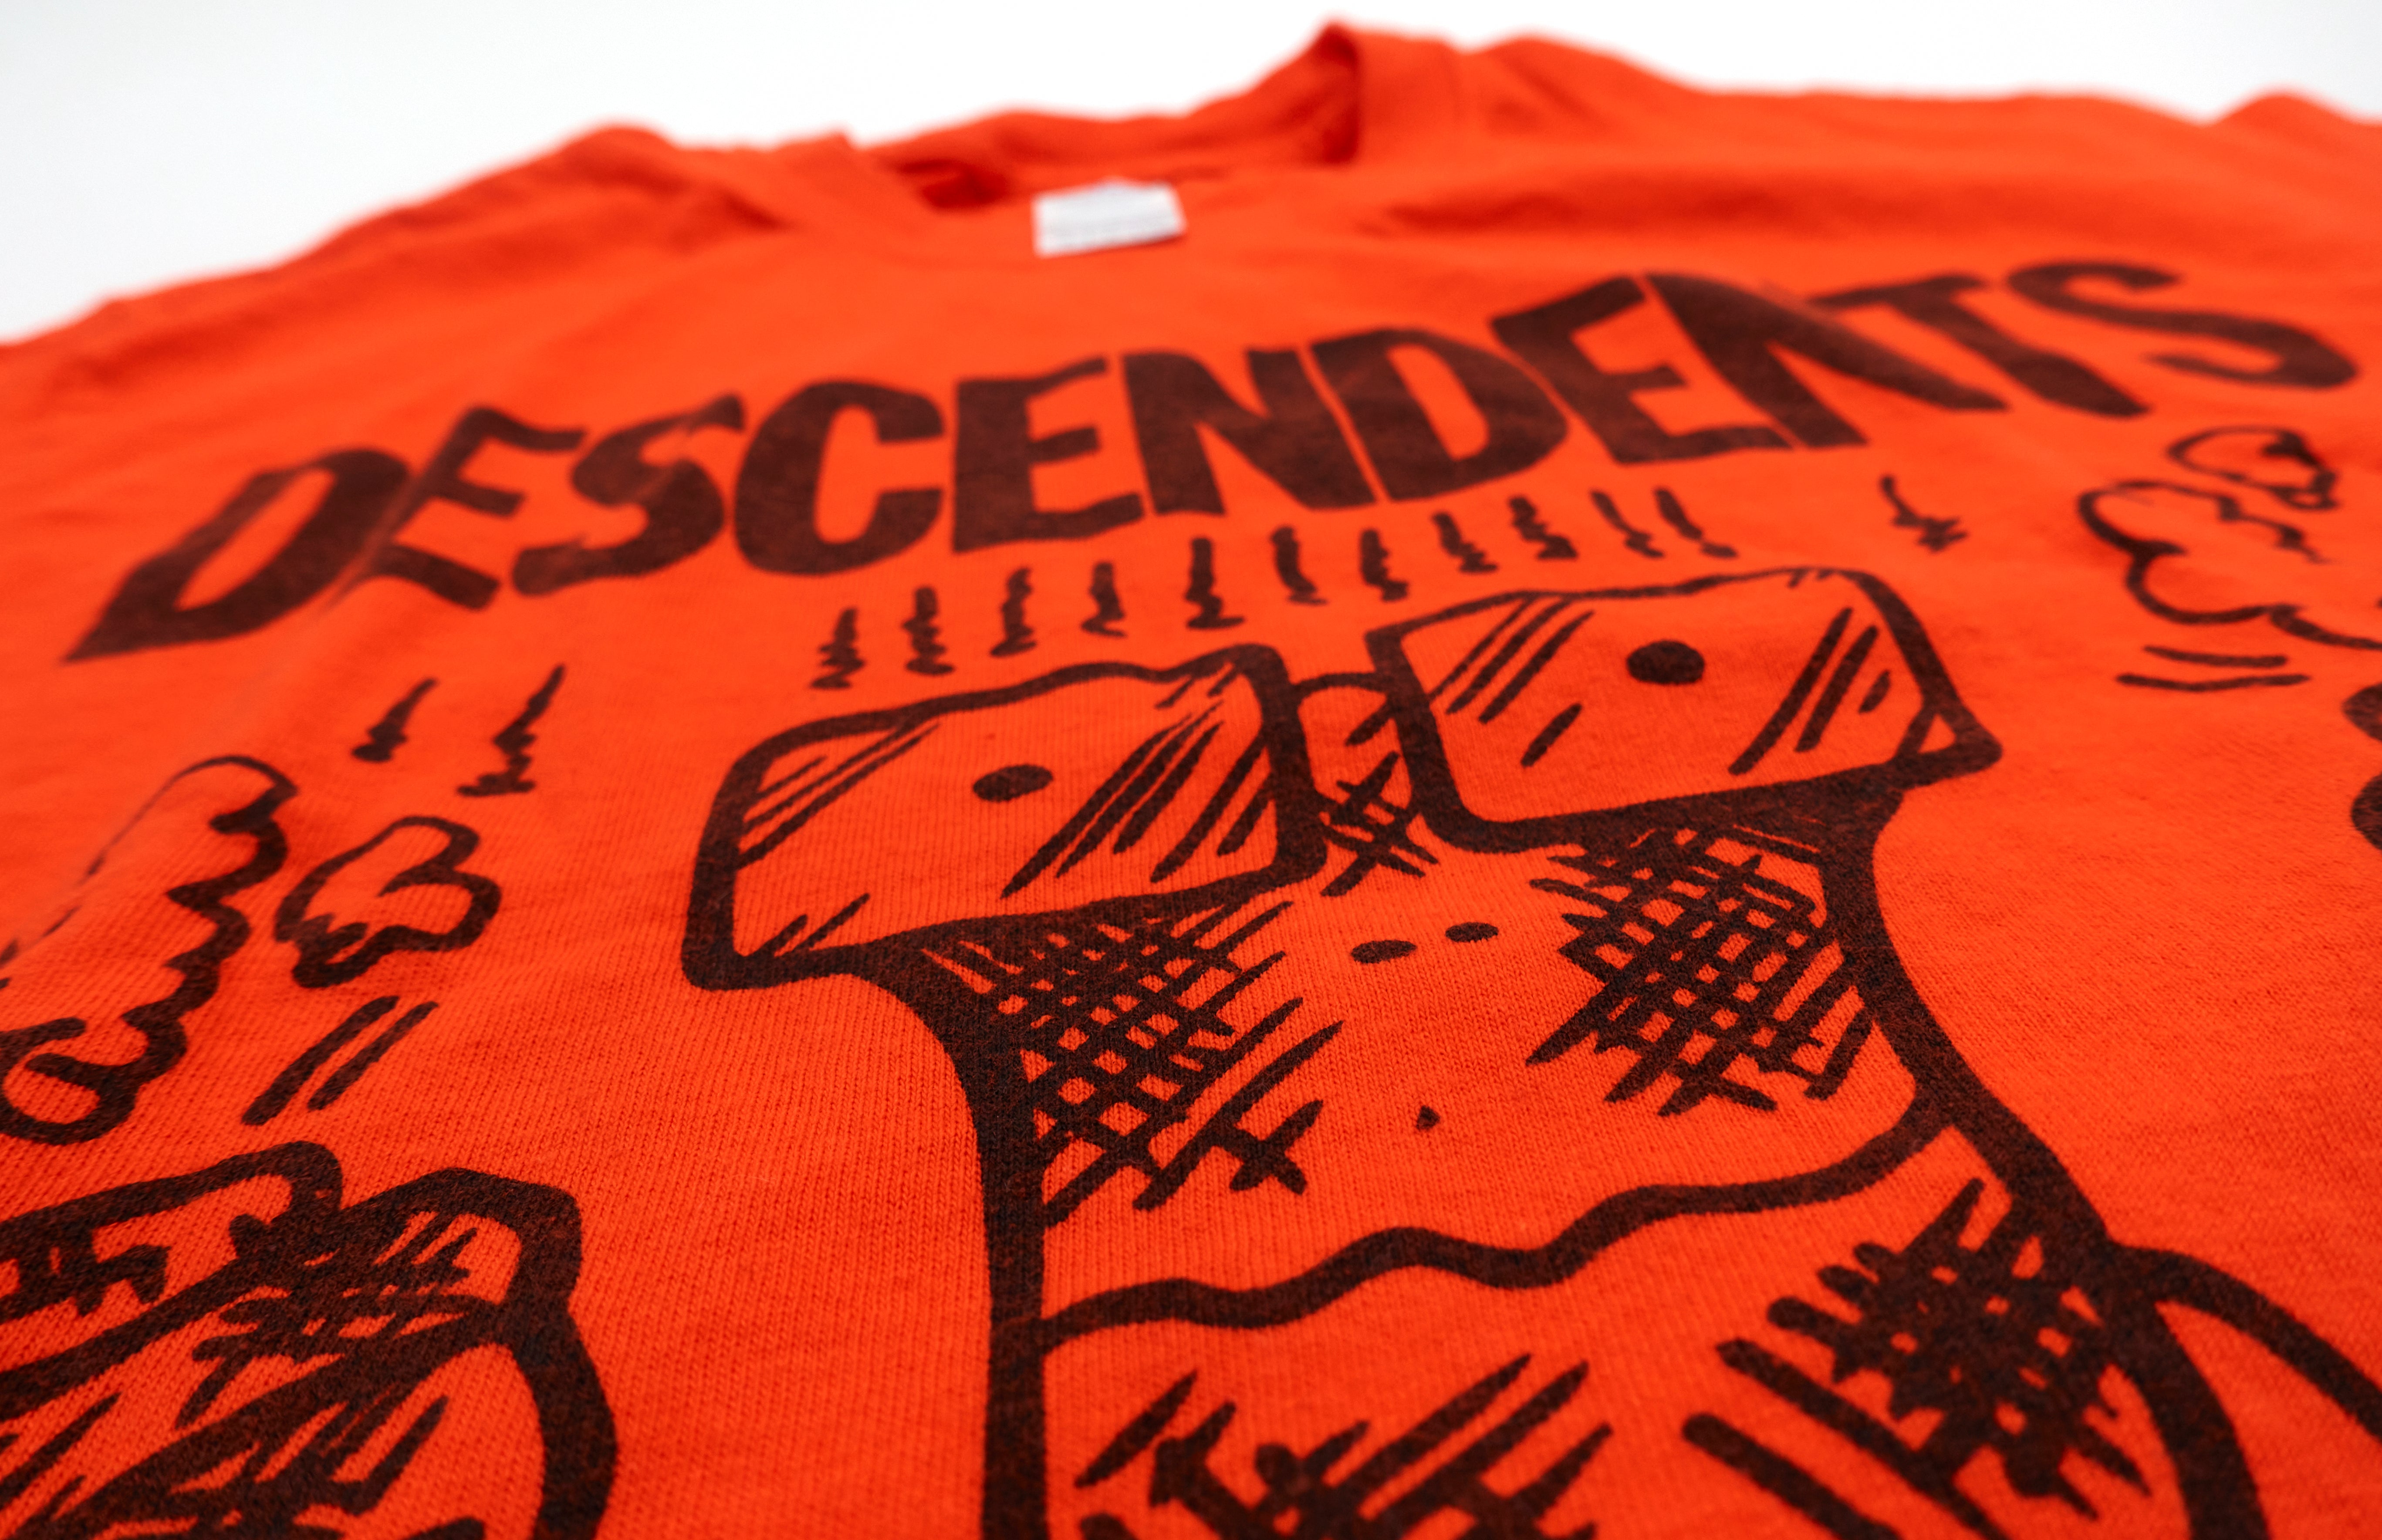 Descendents - SpazzHazard 1/C 2016 Tour Shirt Size Small